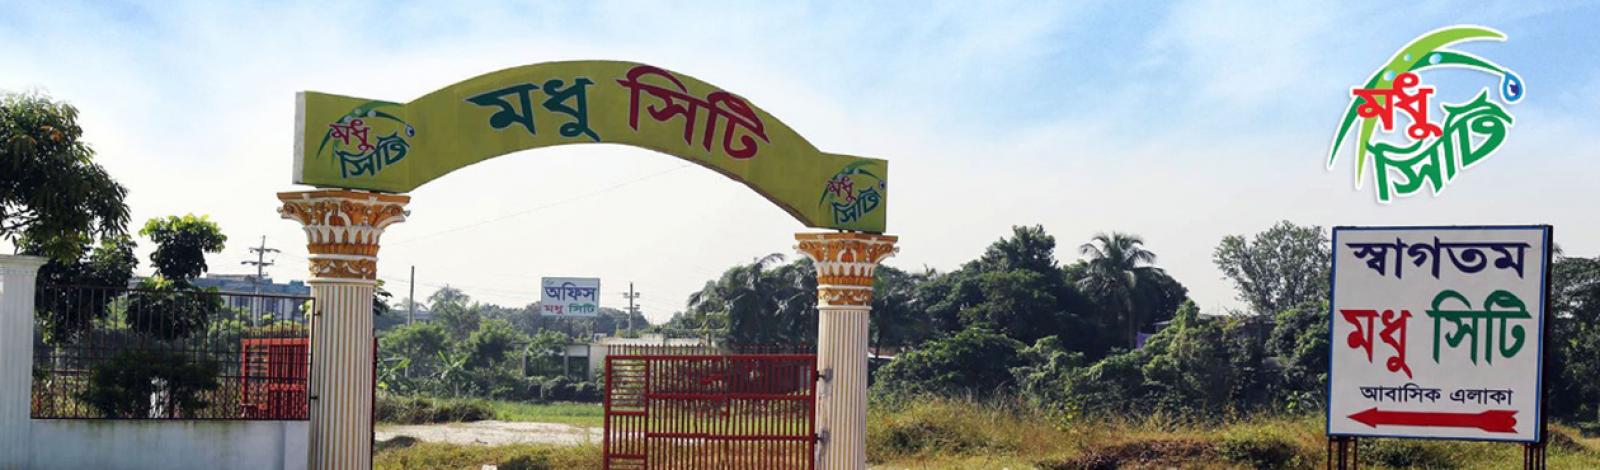 Modhu City banner